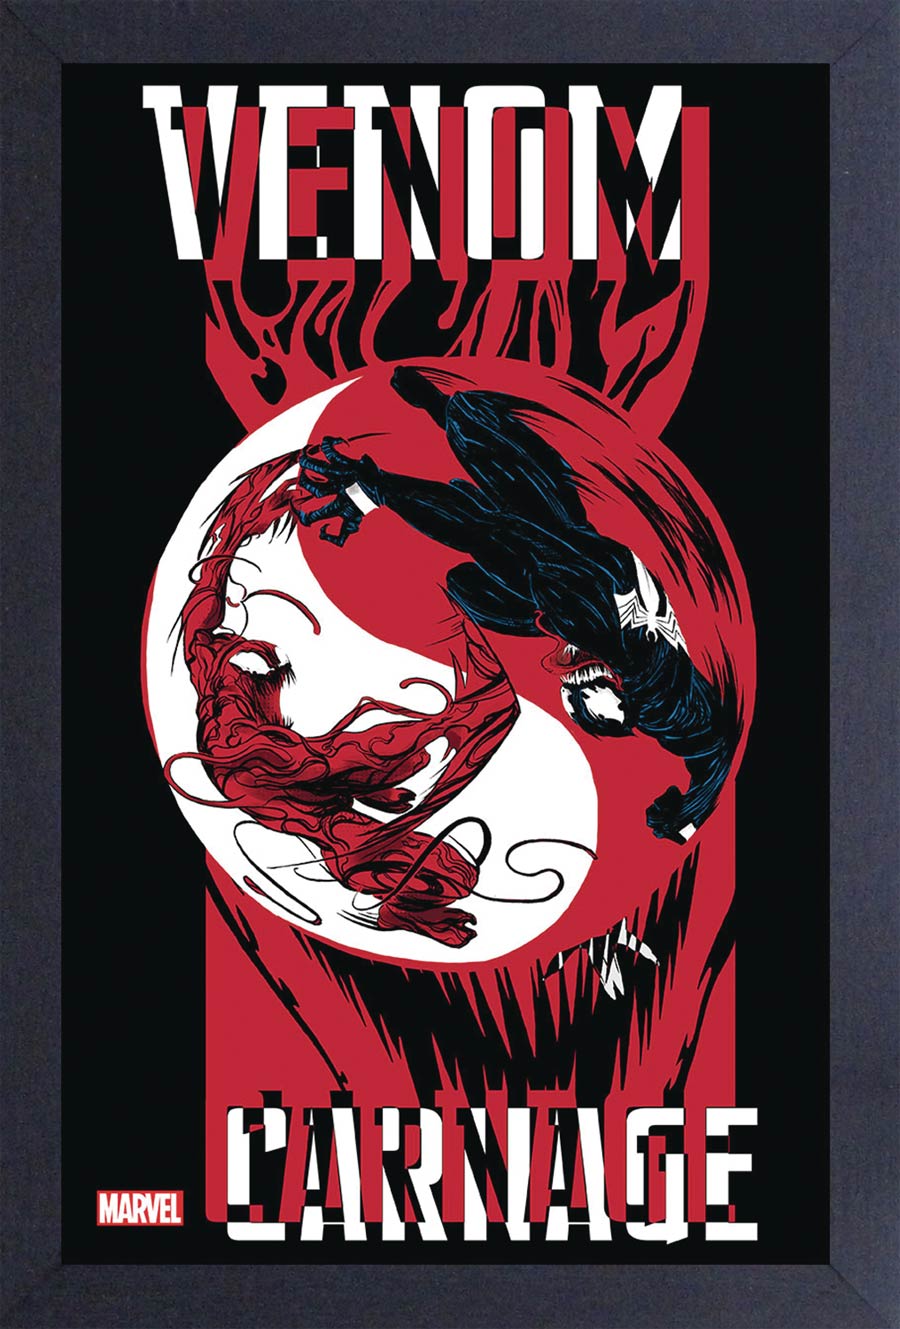 Marvel 11x17 Framed Print - Venom And Carnage Red And Black